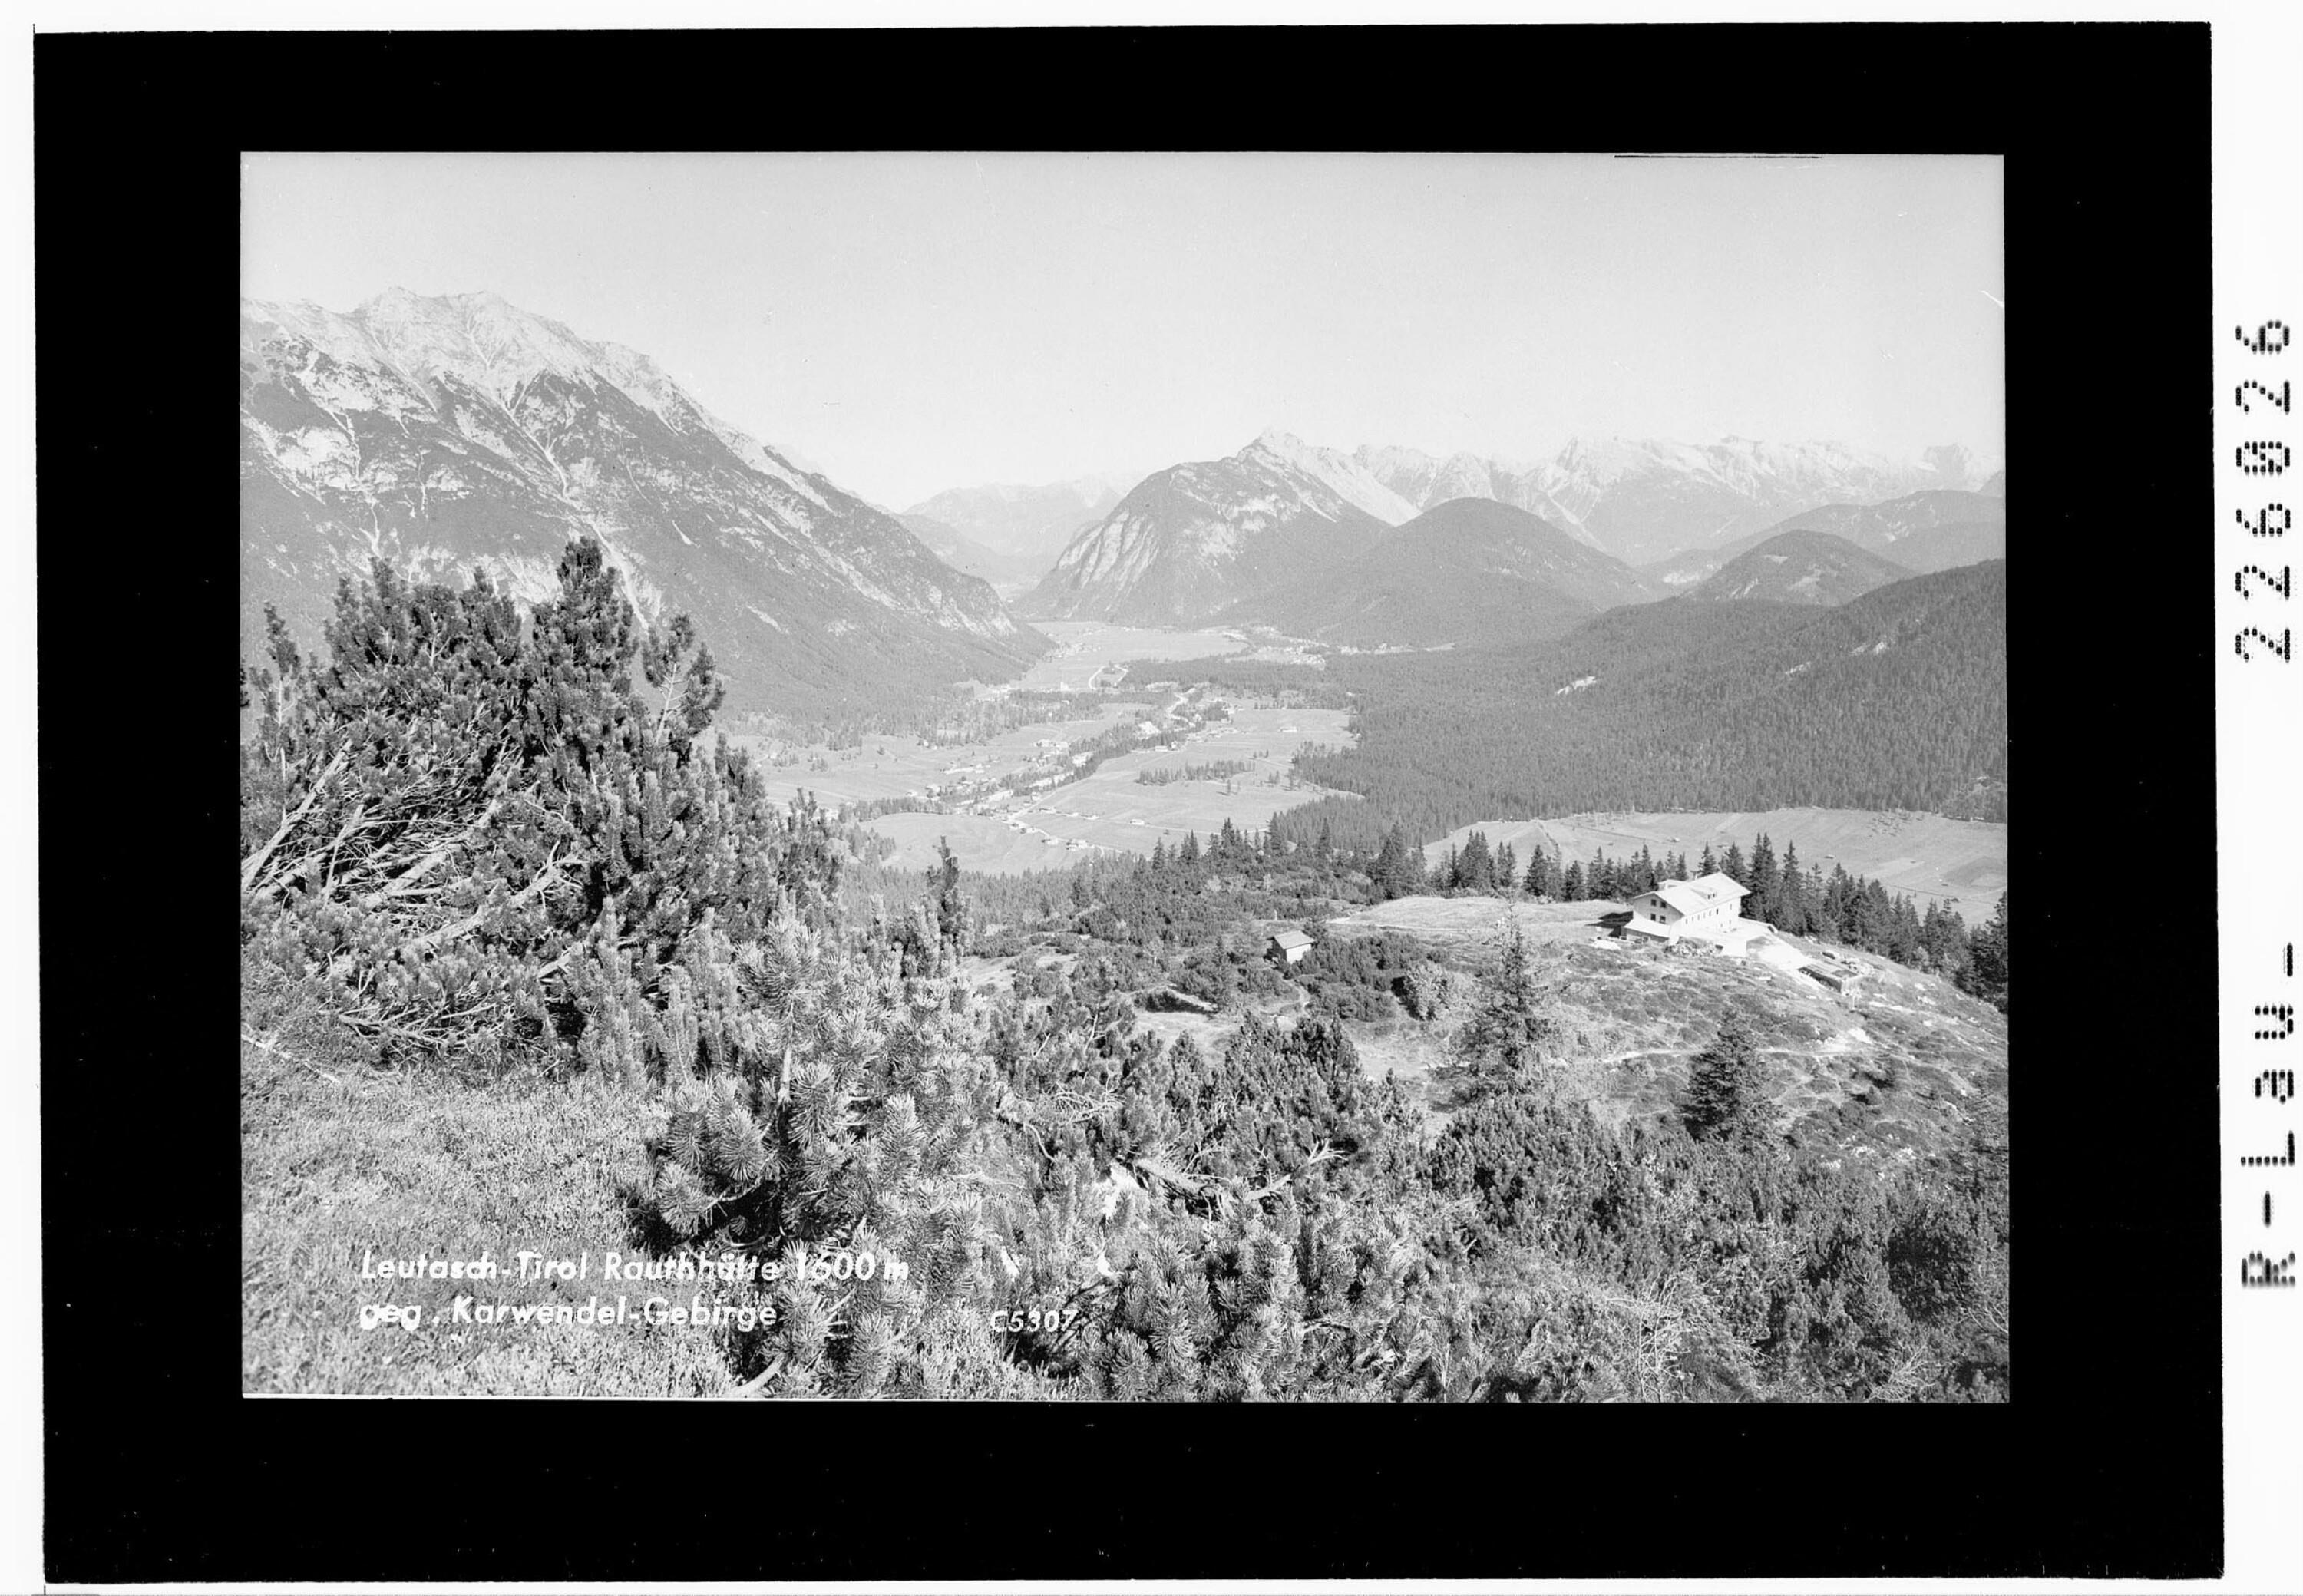 Leutasch - Tirol / Rauthhütte 1600 m gegen Karwendel Gebirge></div>


    <hr>
    <div class=